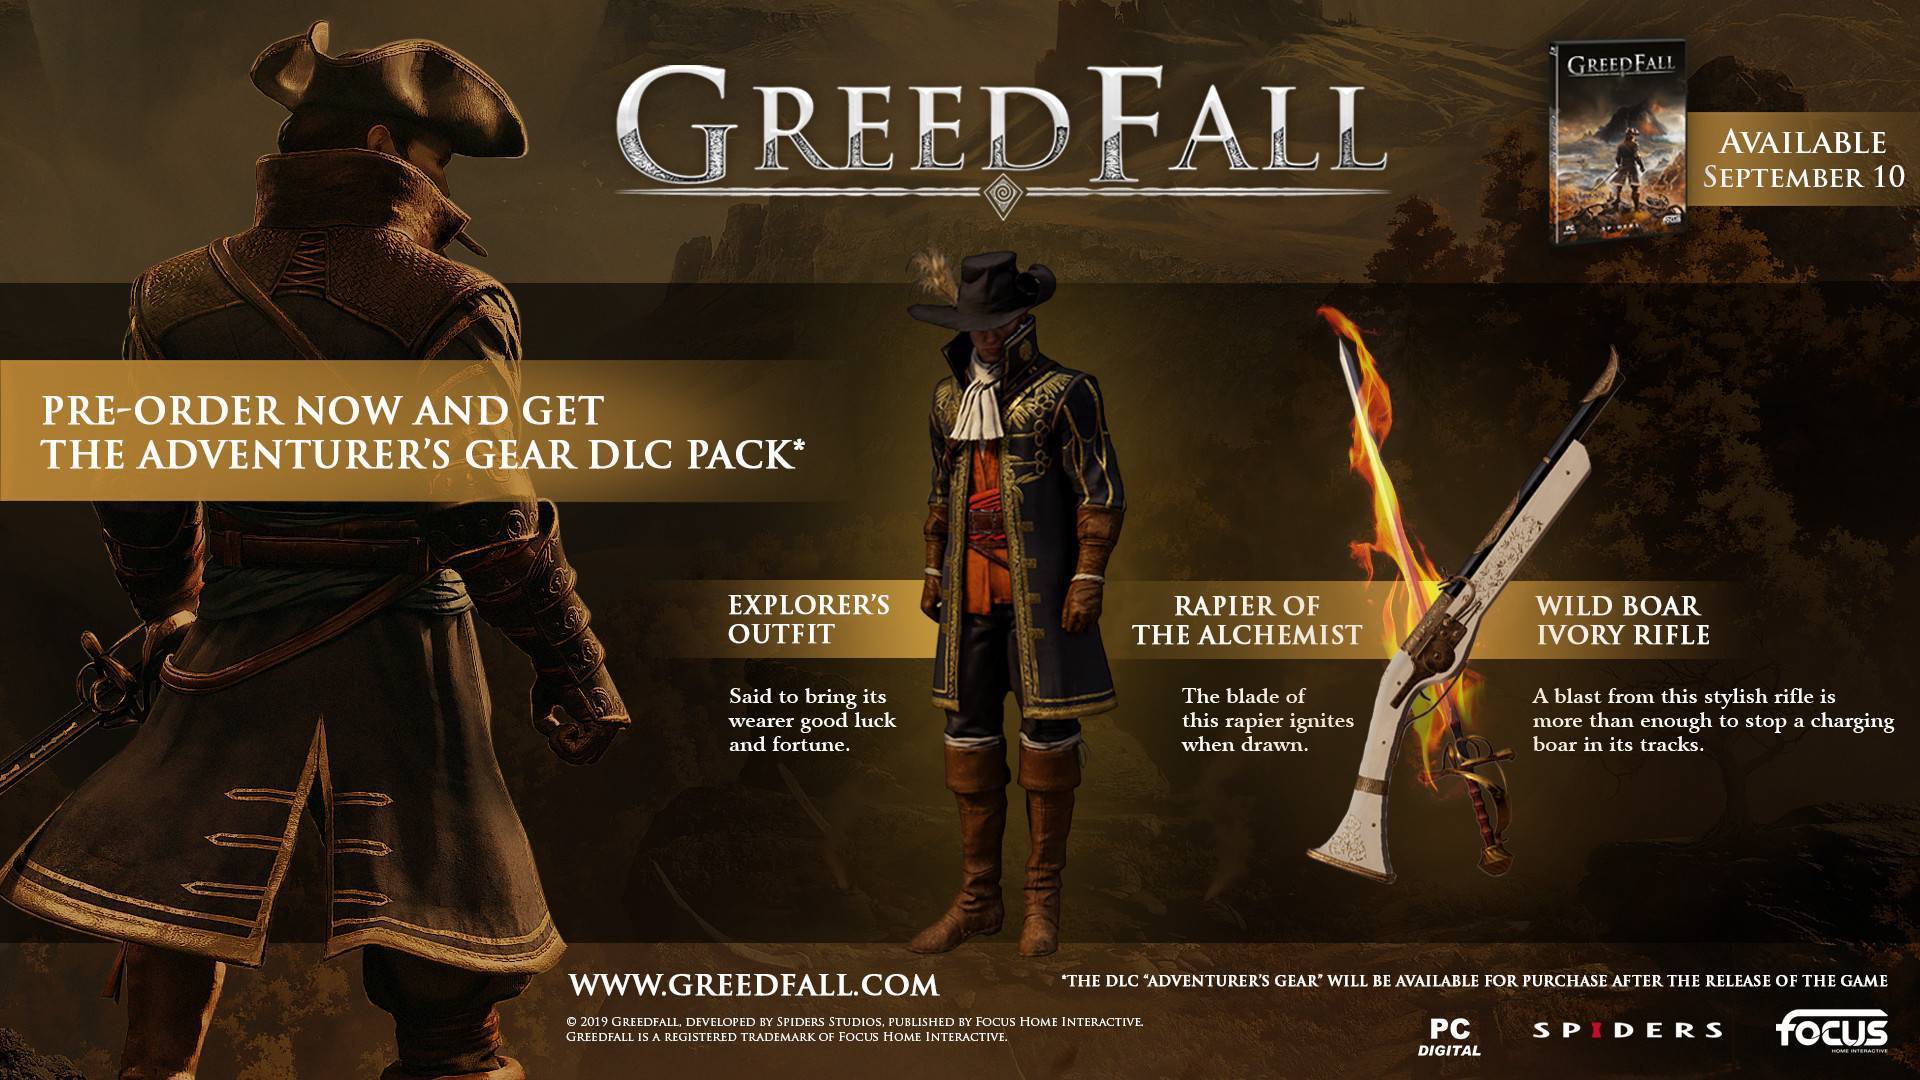 greedfall xbox one digital code